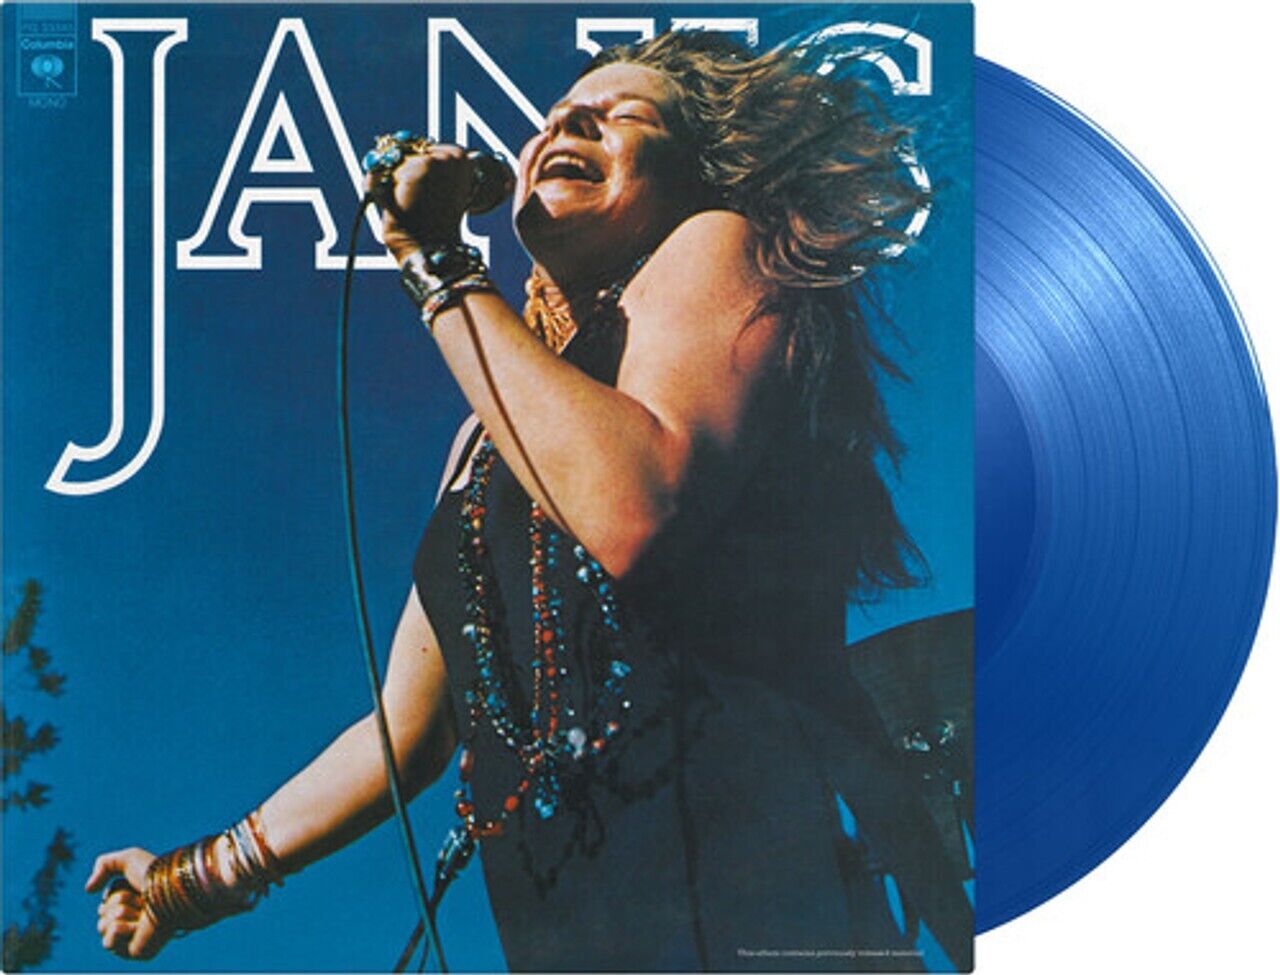 Janis Joplin JANIS 180g New Limited Edition Blue Colored Vinyl 2 LP